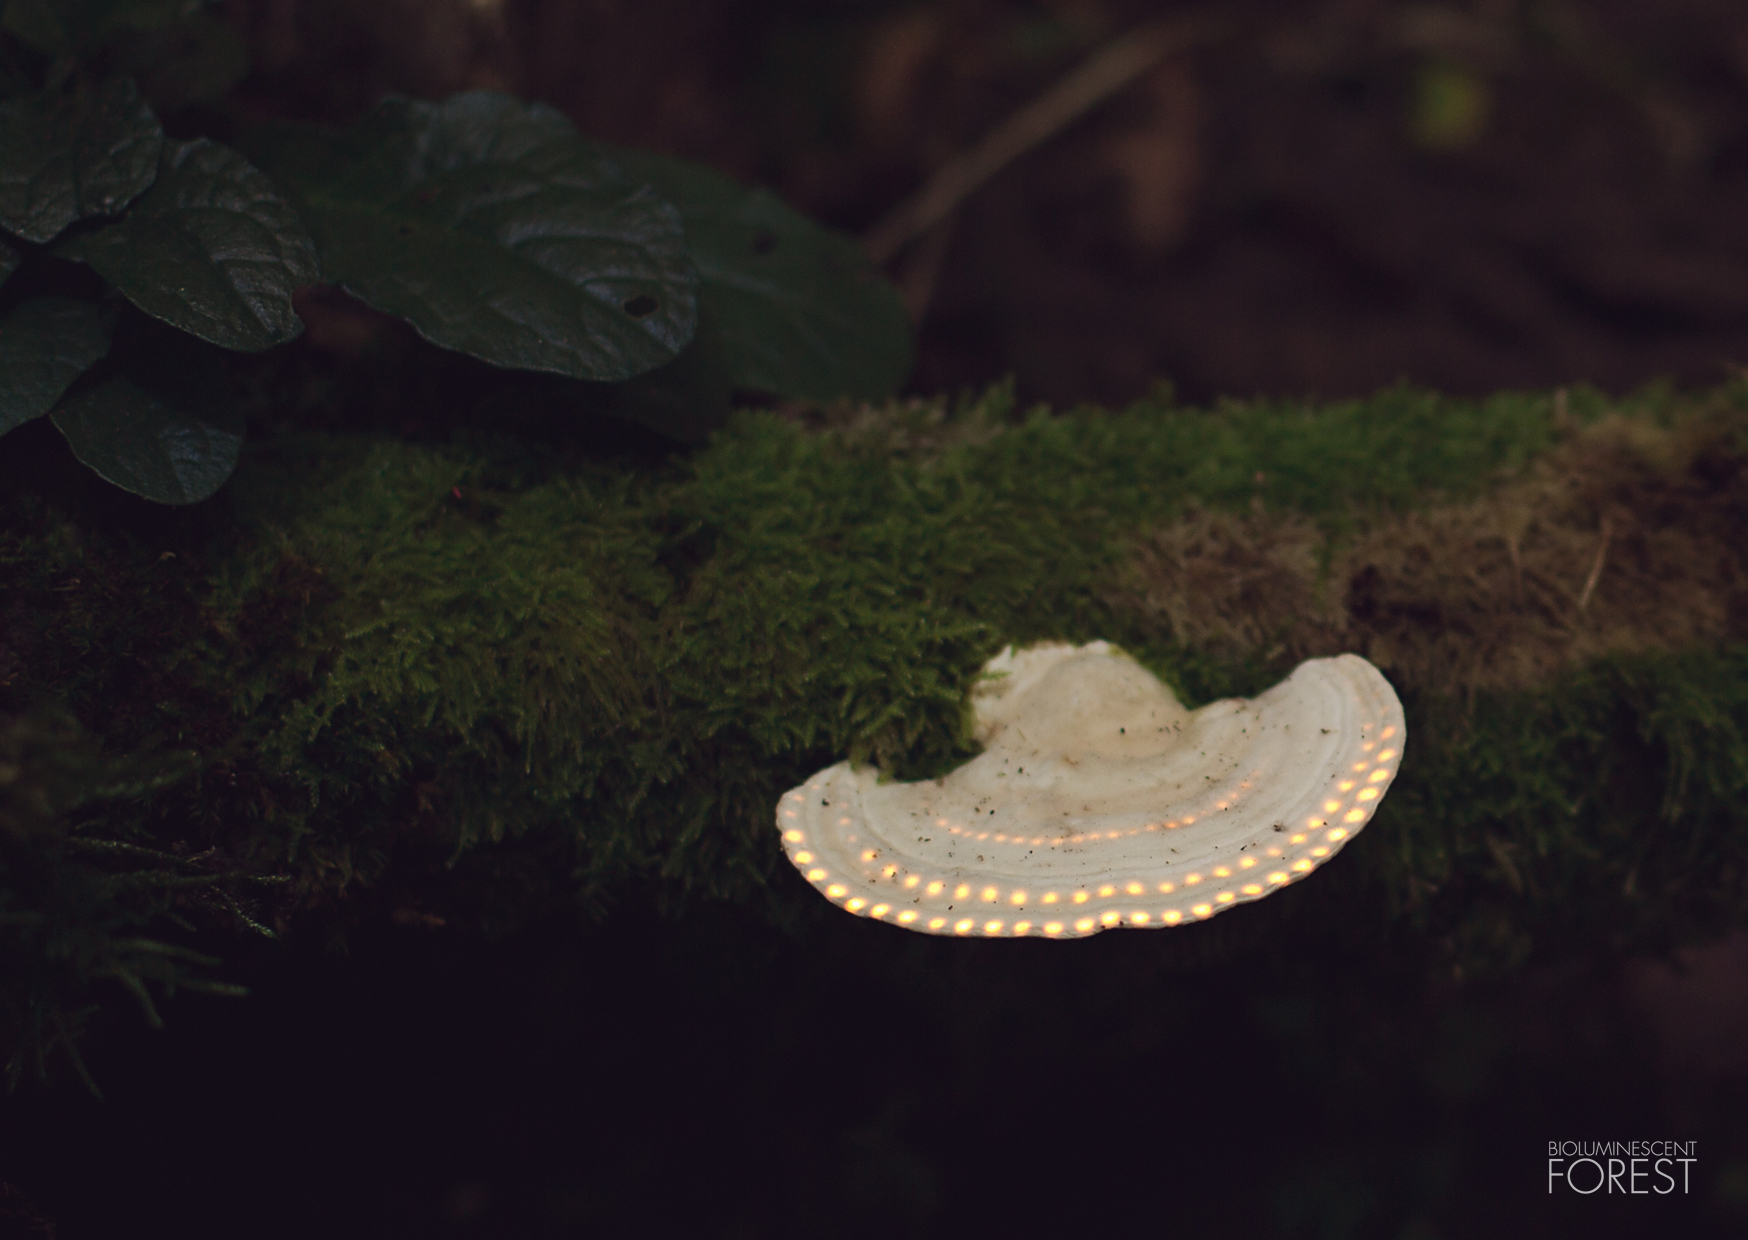 Bioluminescent forest – Ufo_Mushroom